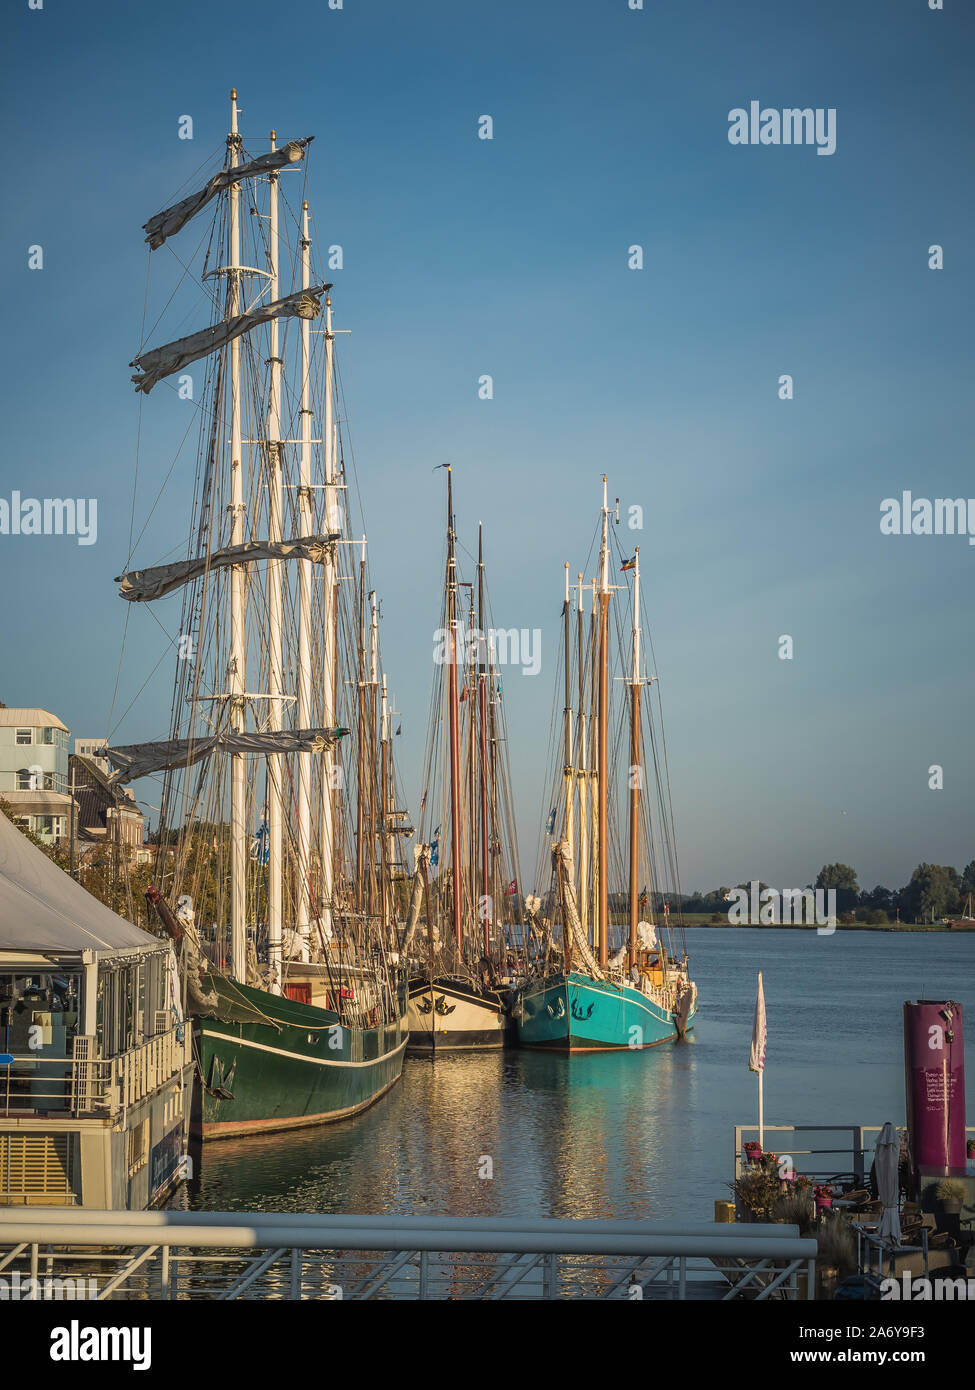 A lo largo de la IJsselkade Tallships en Kampen, Países Bajos en la soleada tarde de otoño Foto de stock